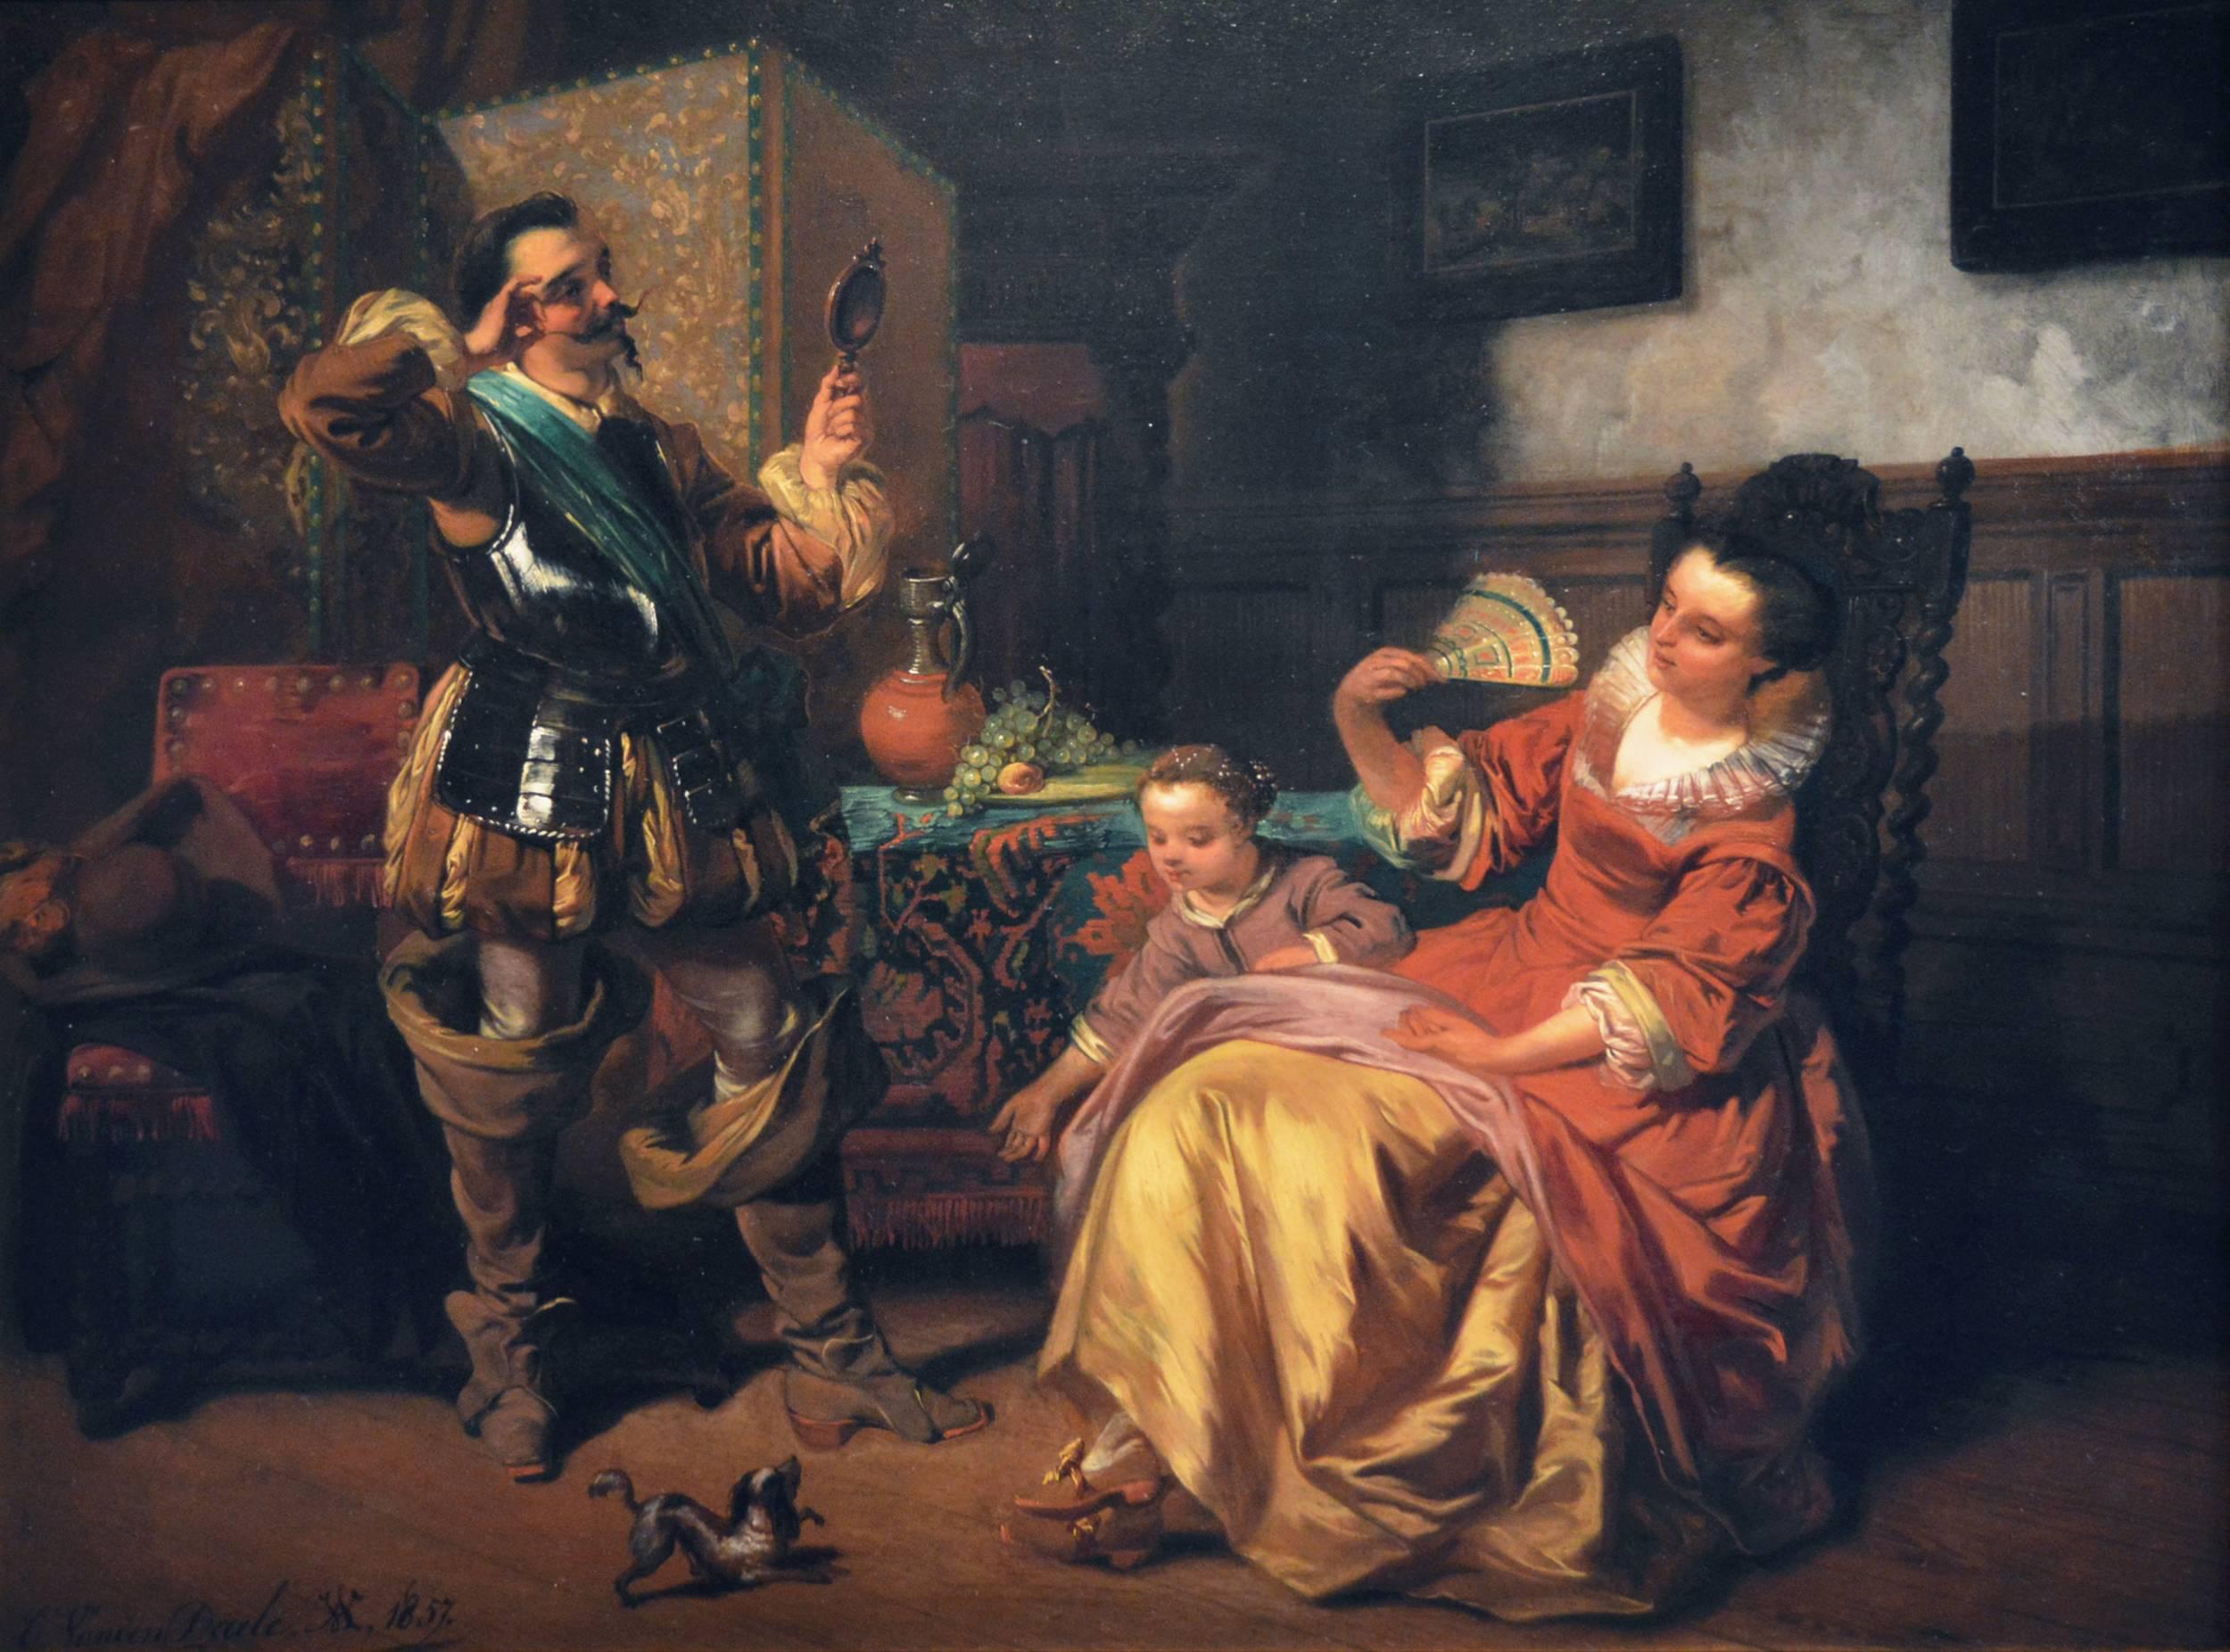 19th Century historical genre oil painting of a cavalier - Painting by Casimir van den Daele